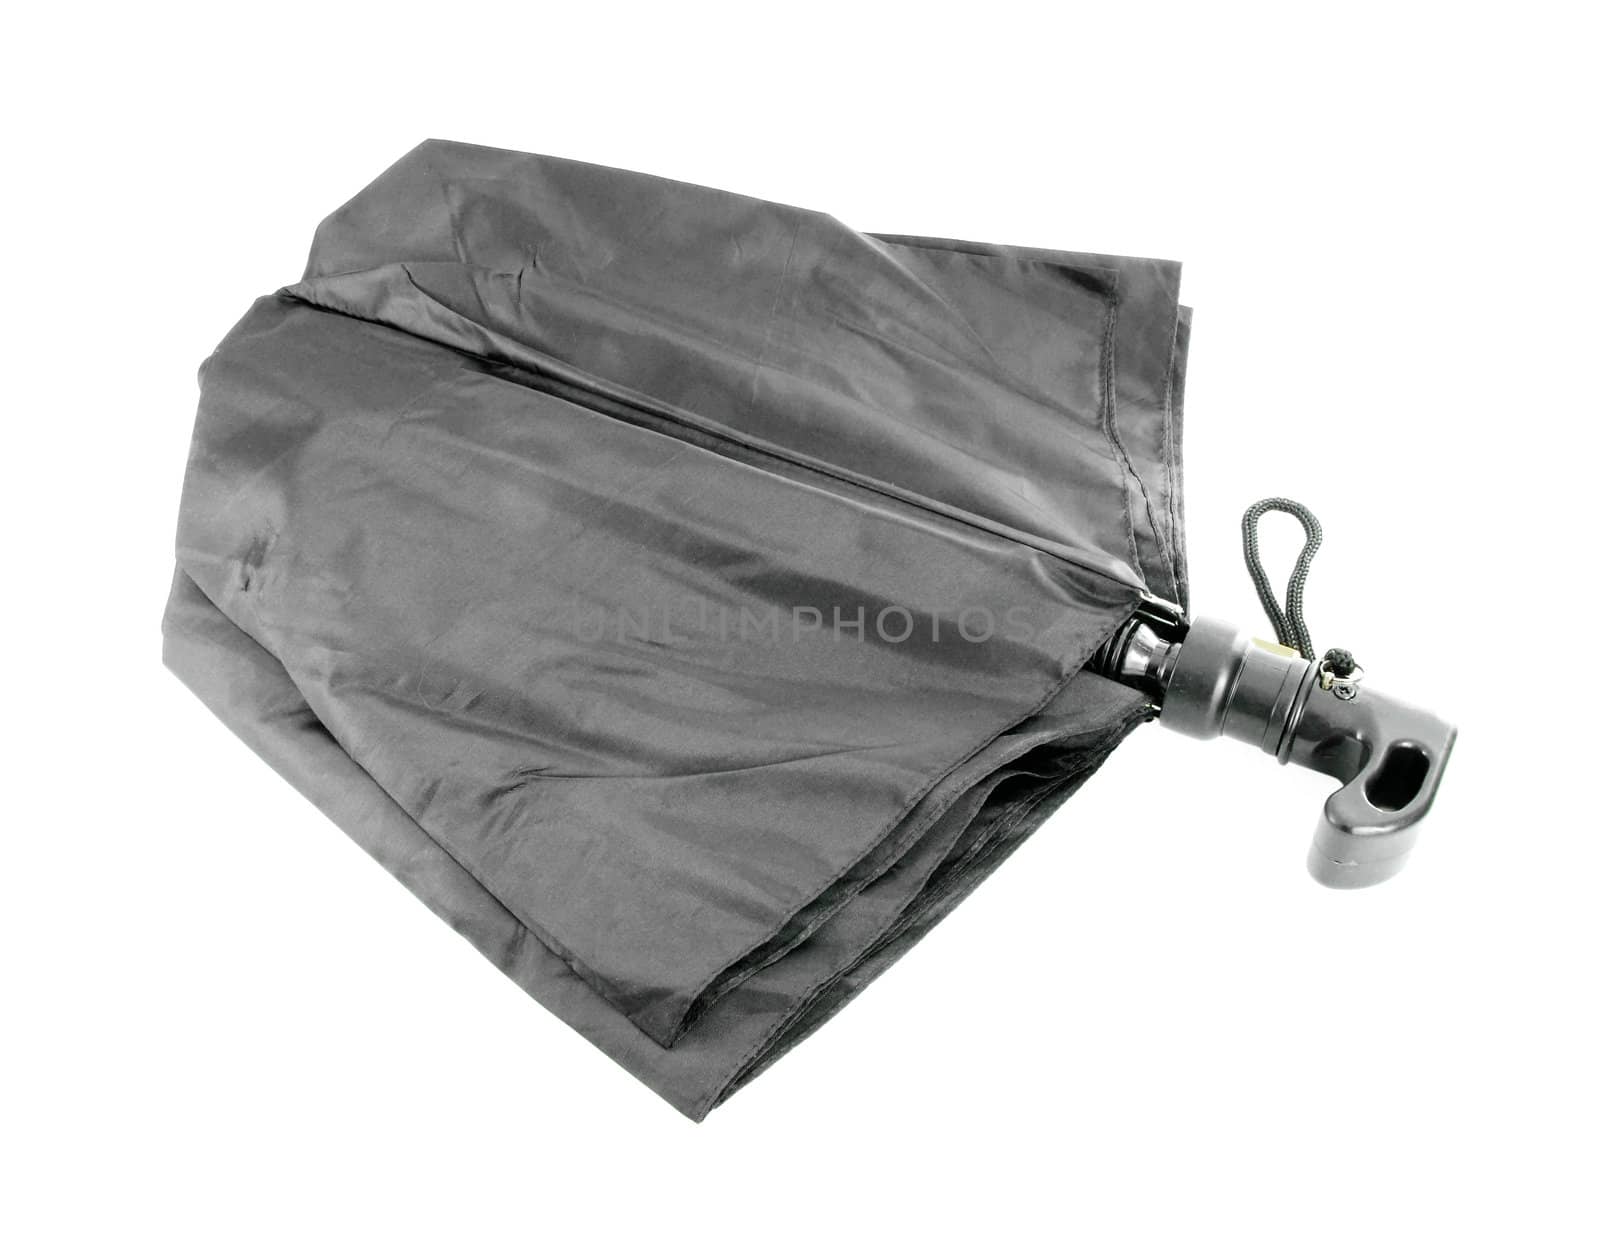 the black closed umbrella on white by geargodz